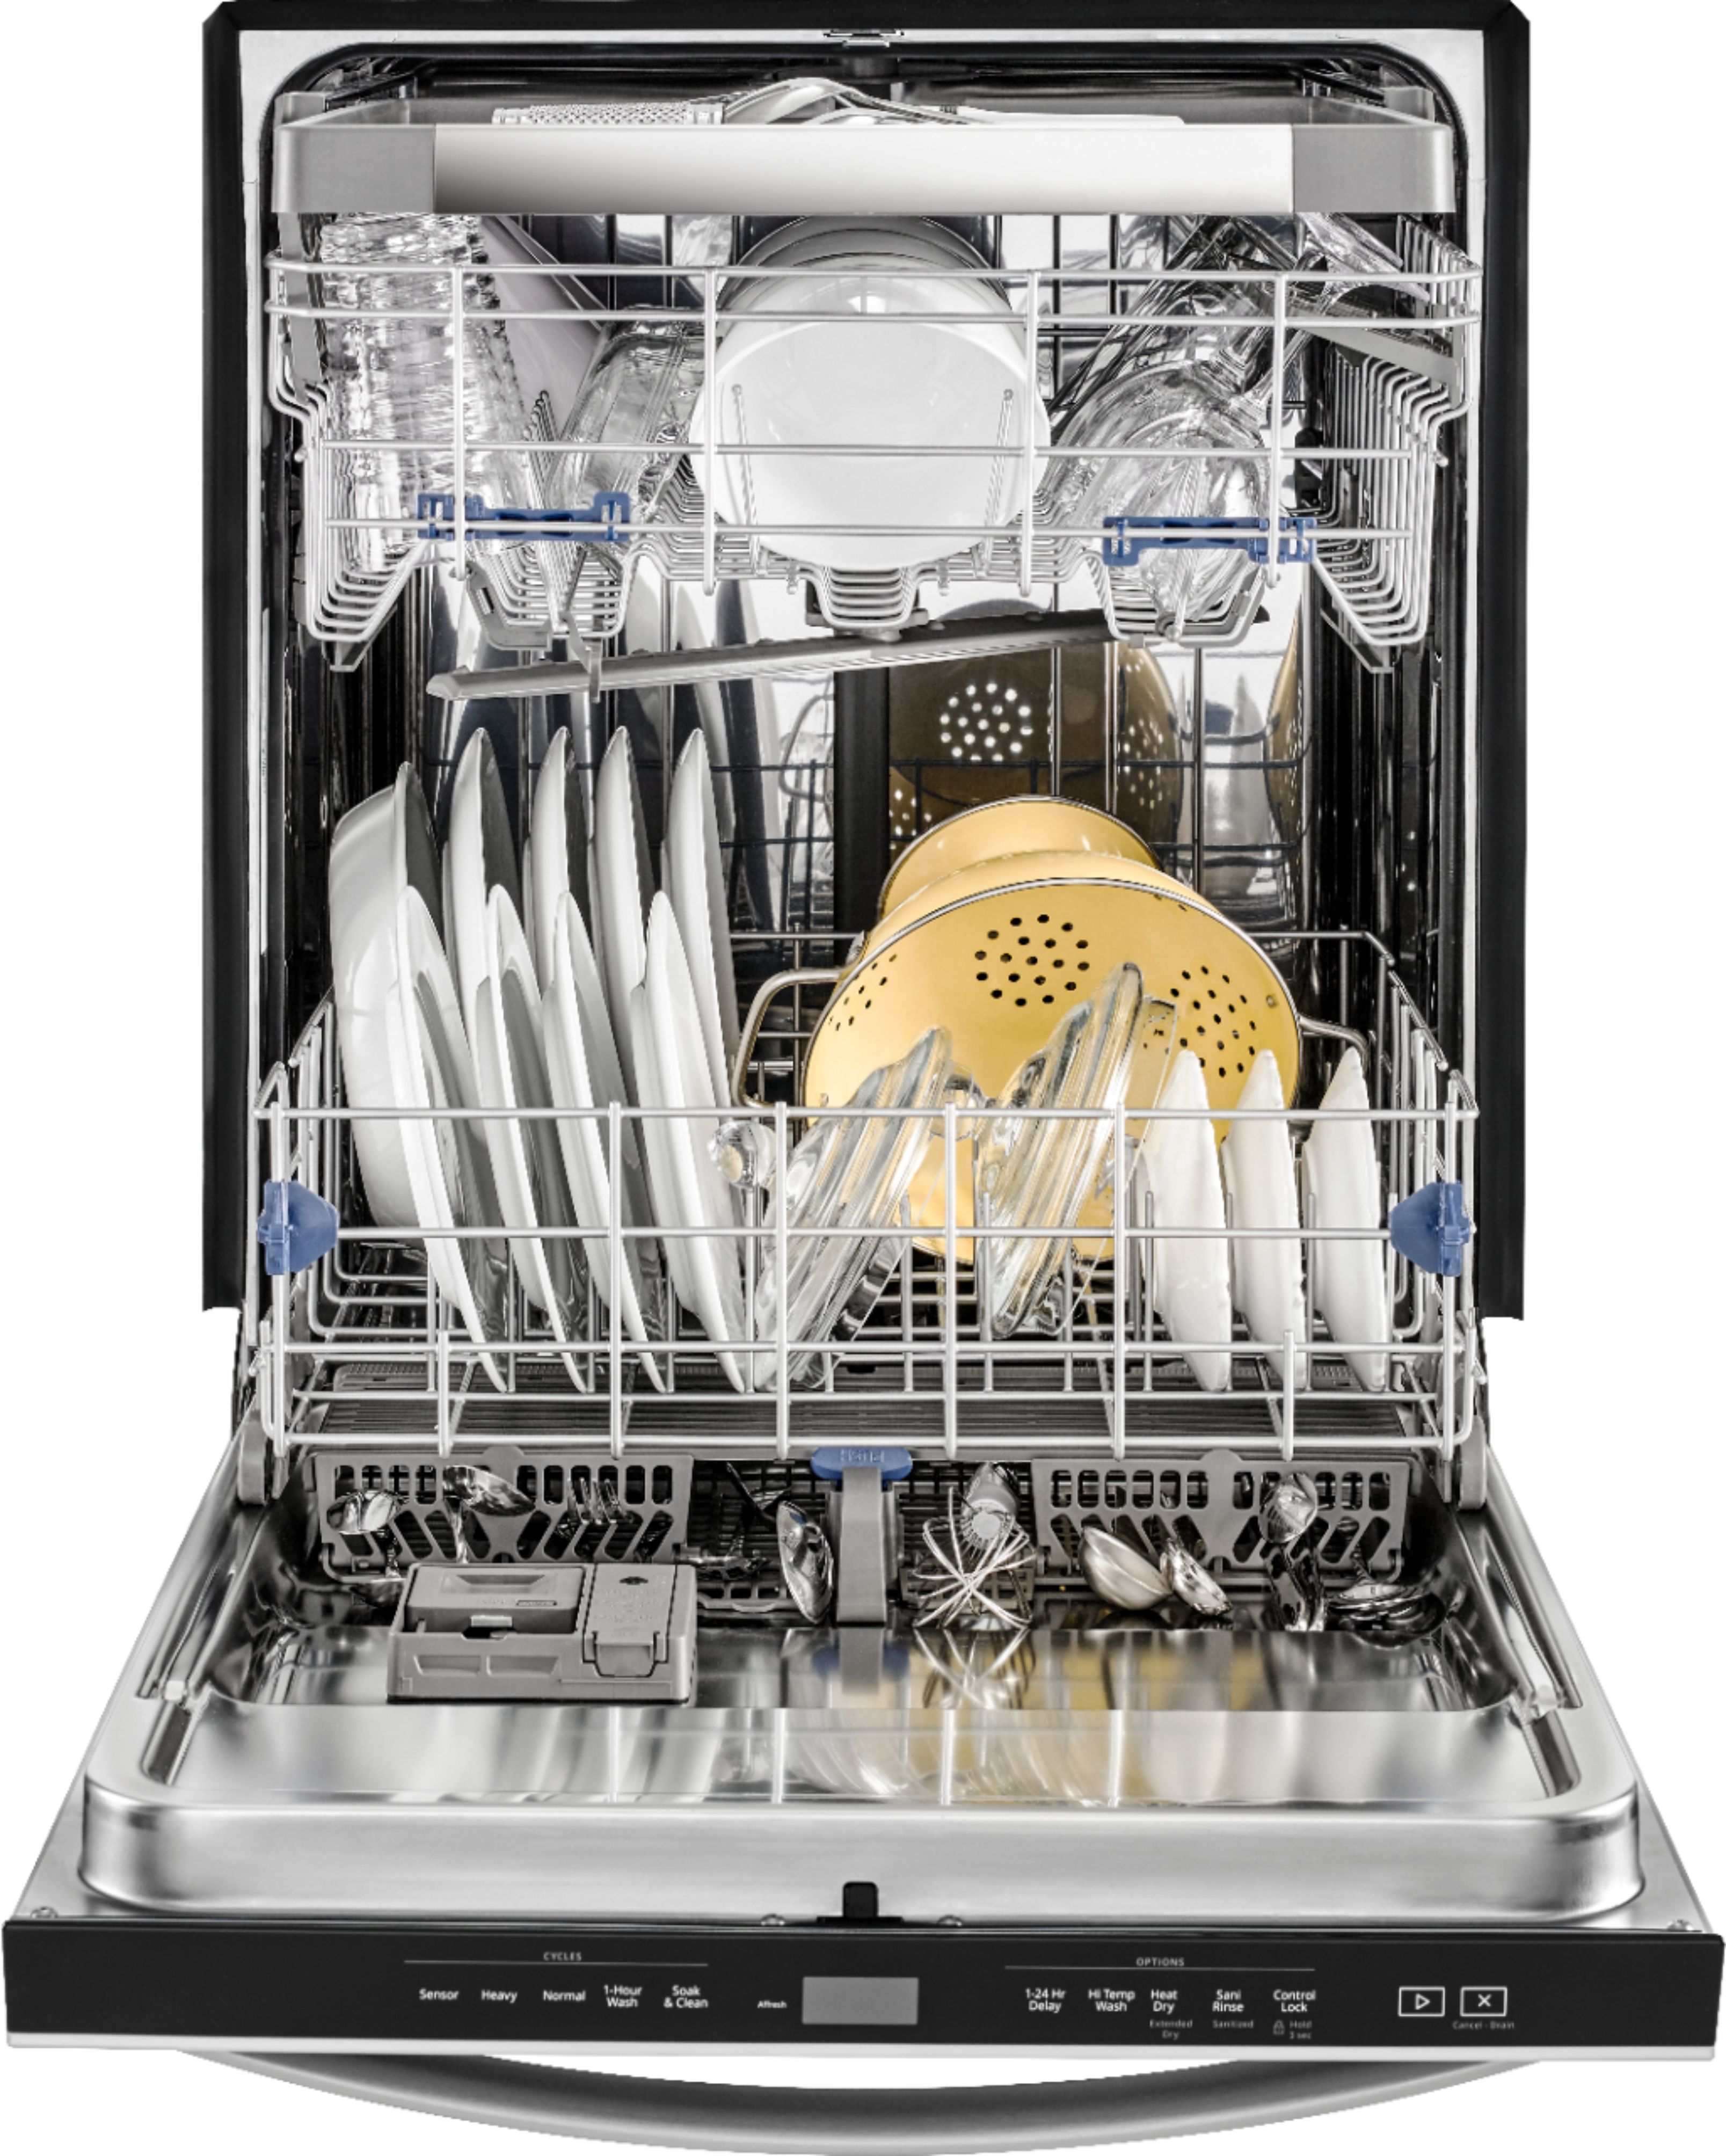 whirlpool dishwasher reviews